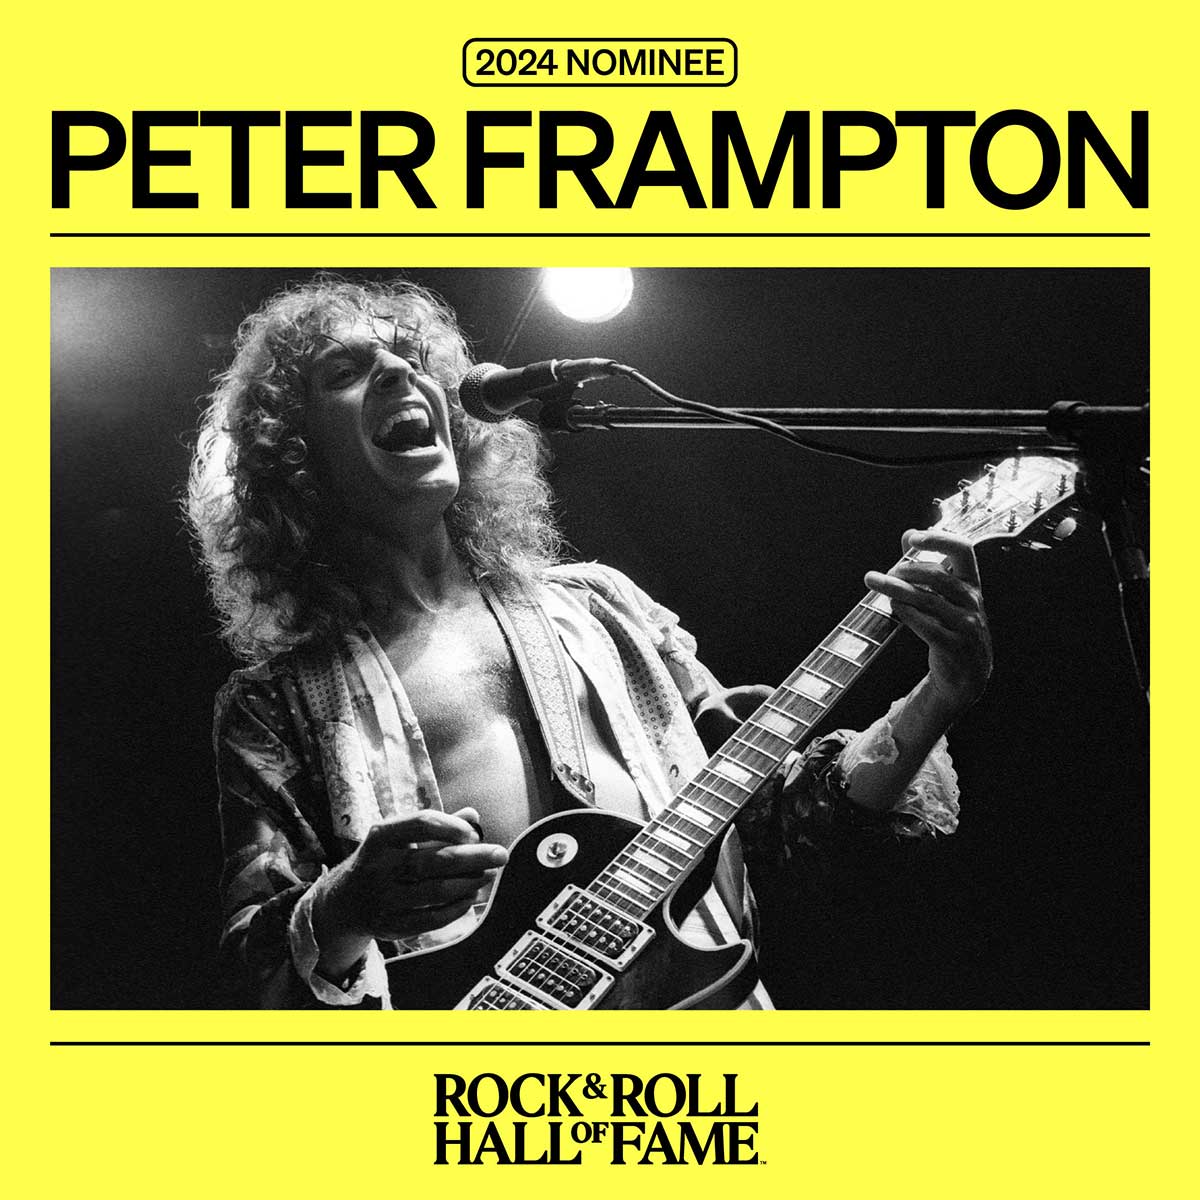 peter frampton tour dates 2023